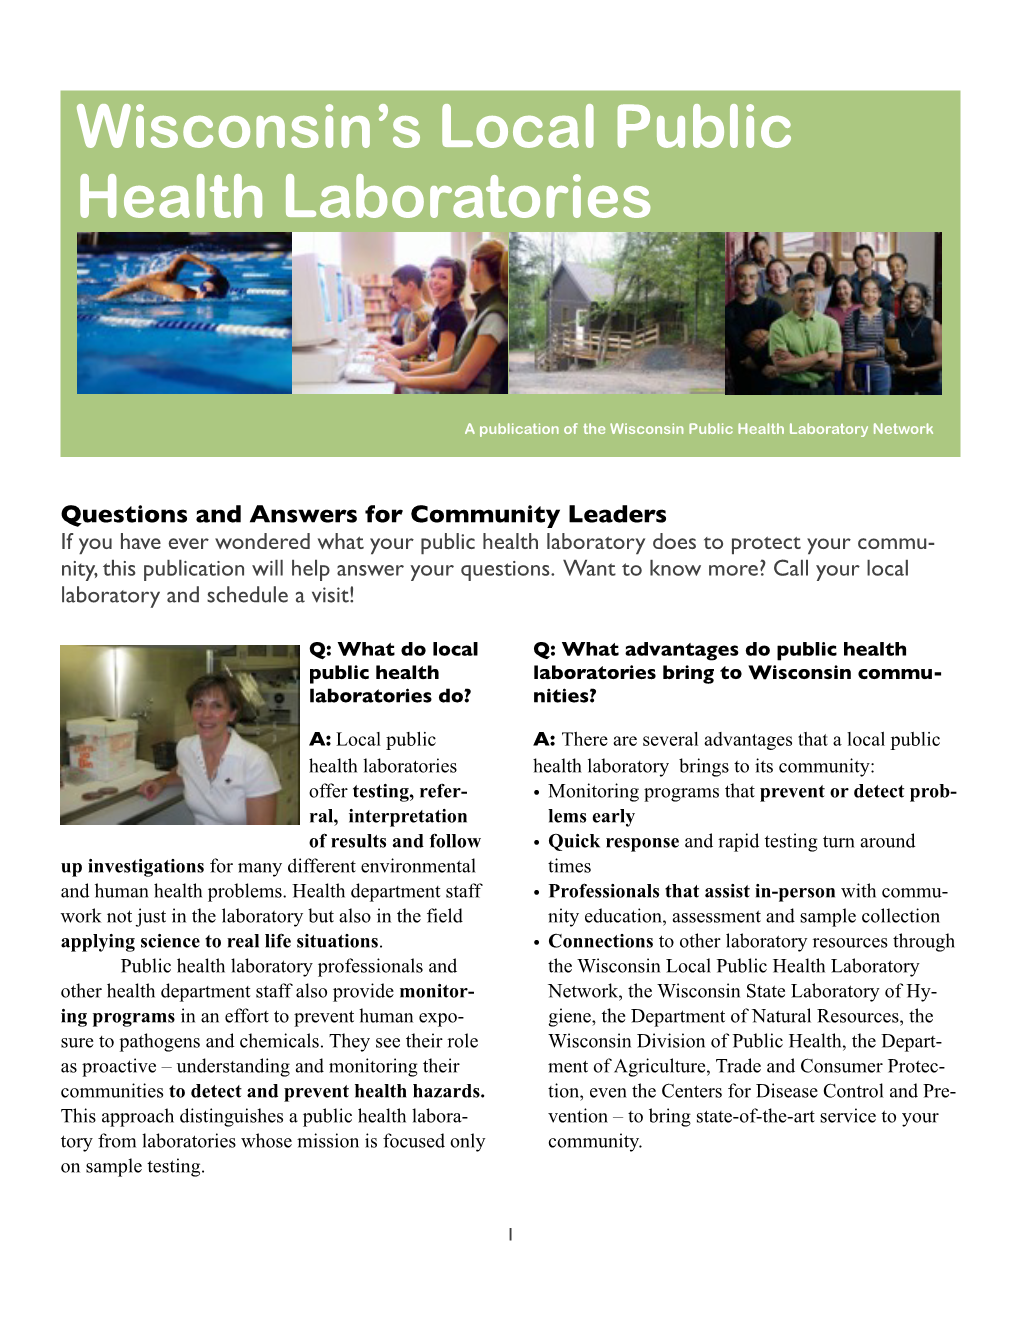 Wisconsin's Local Public Health Laboratories